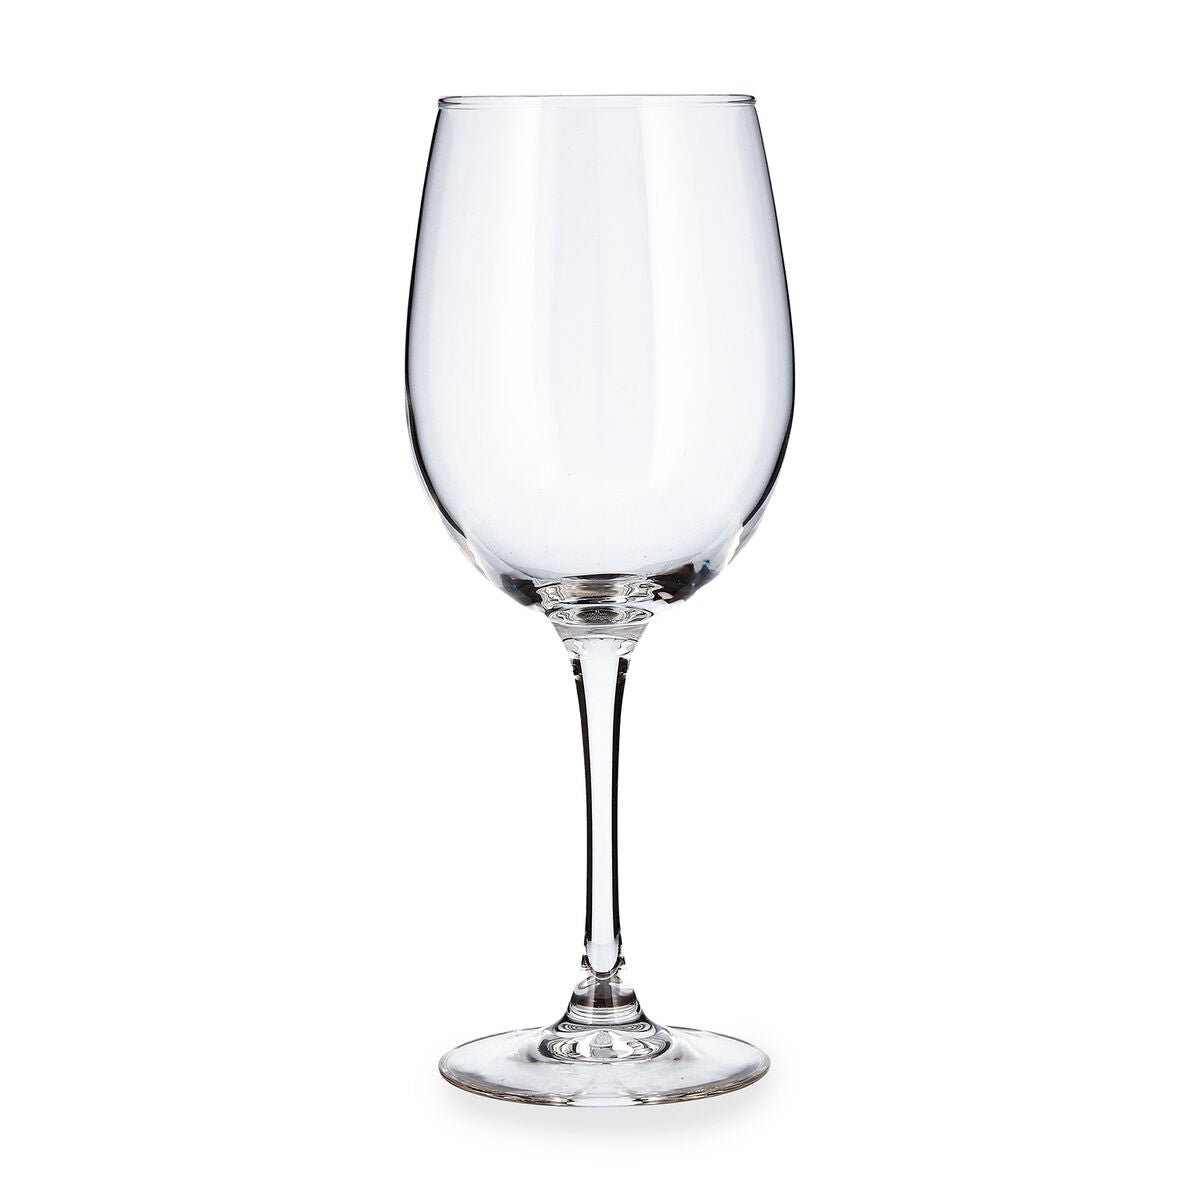 verre de vin Luminarc Duero Transparent verre 470 ml (6 Unités)